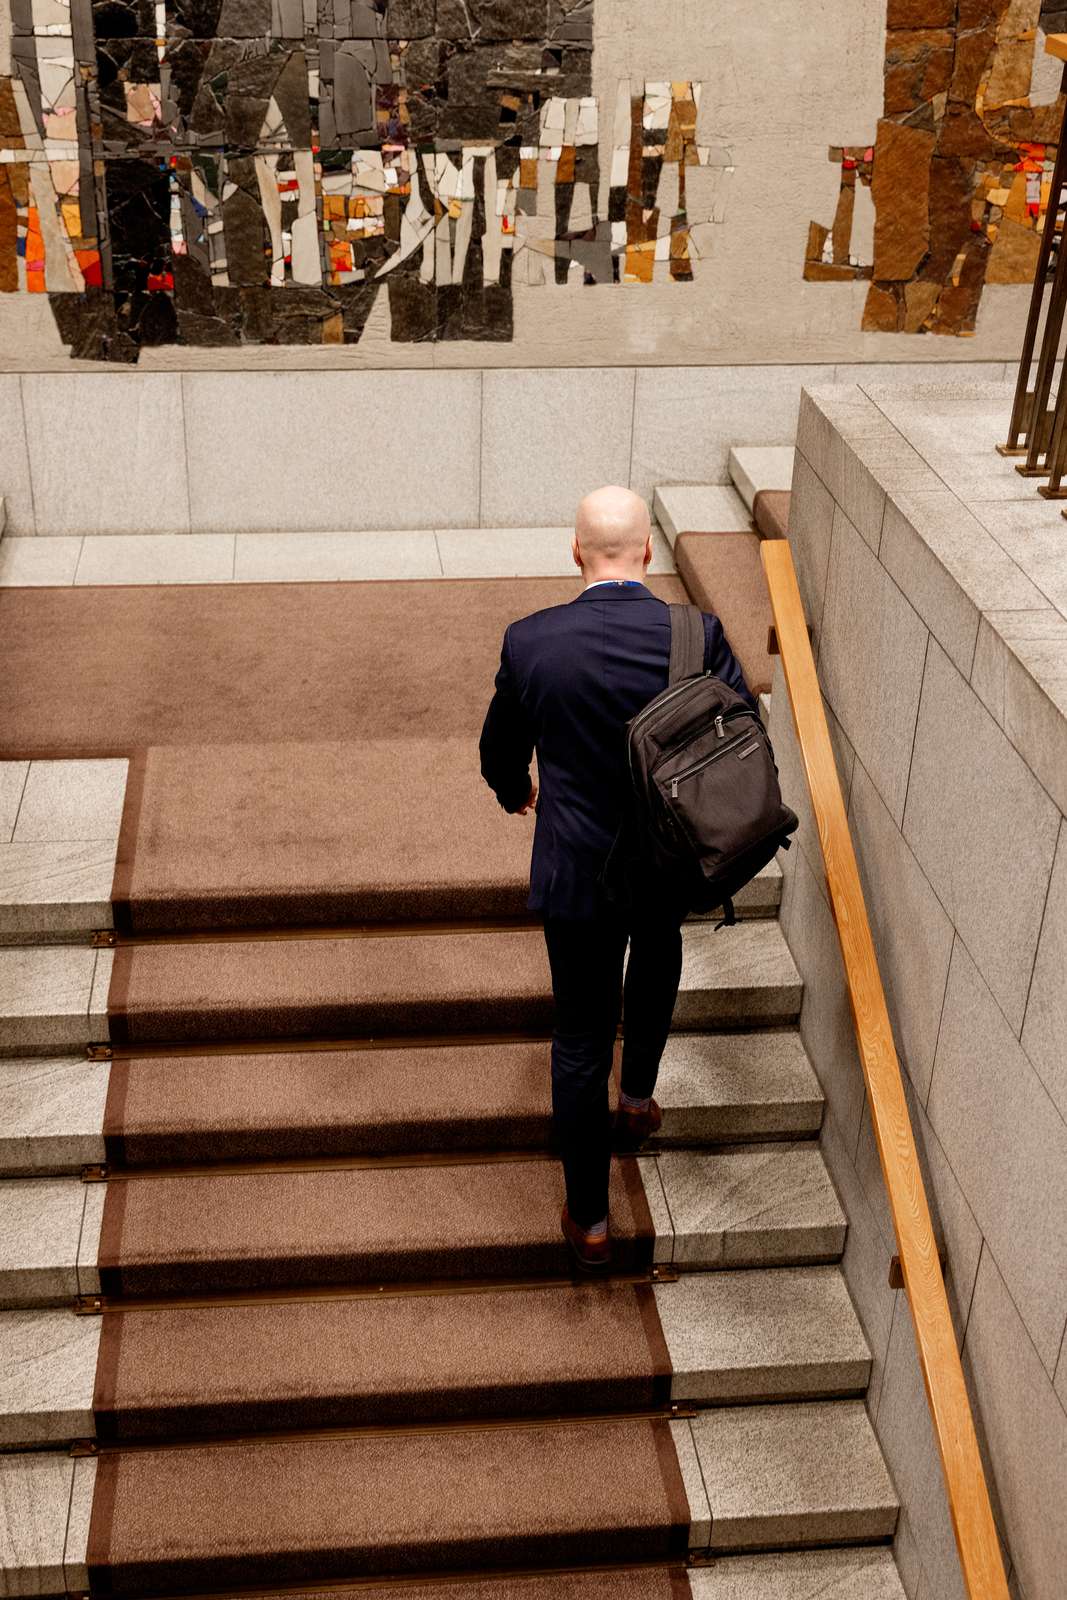 Stairs in Stortinget